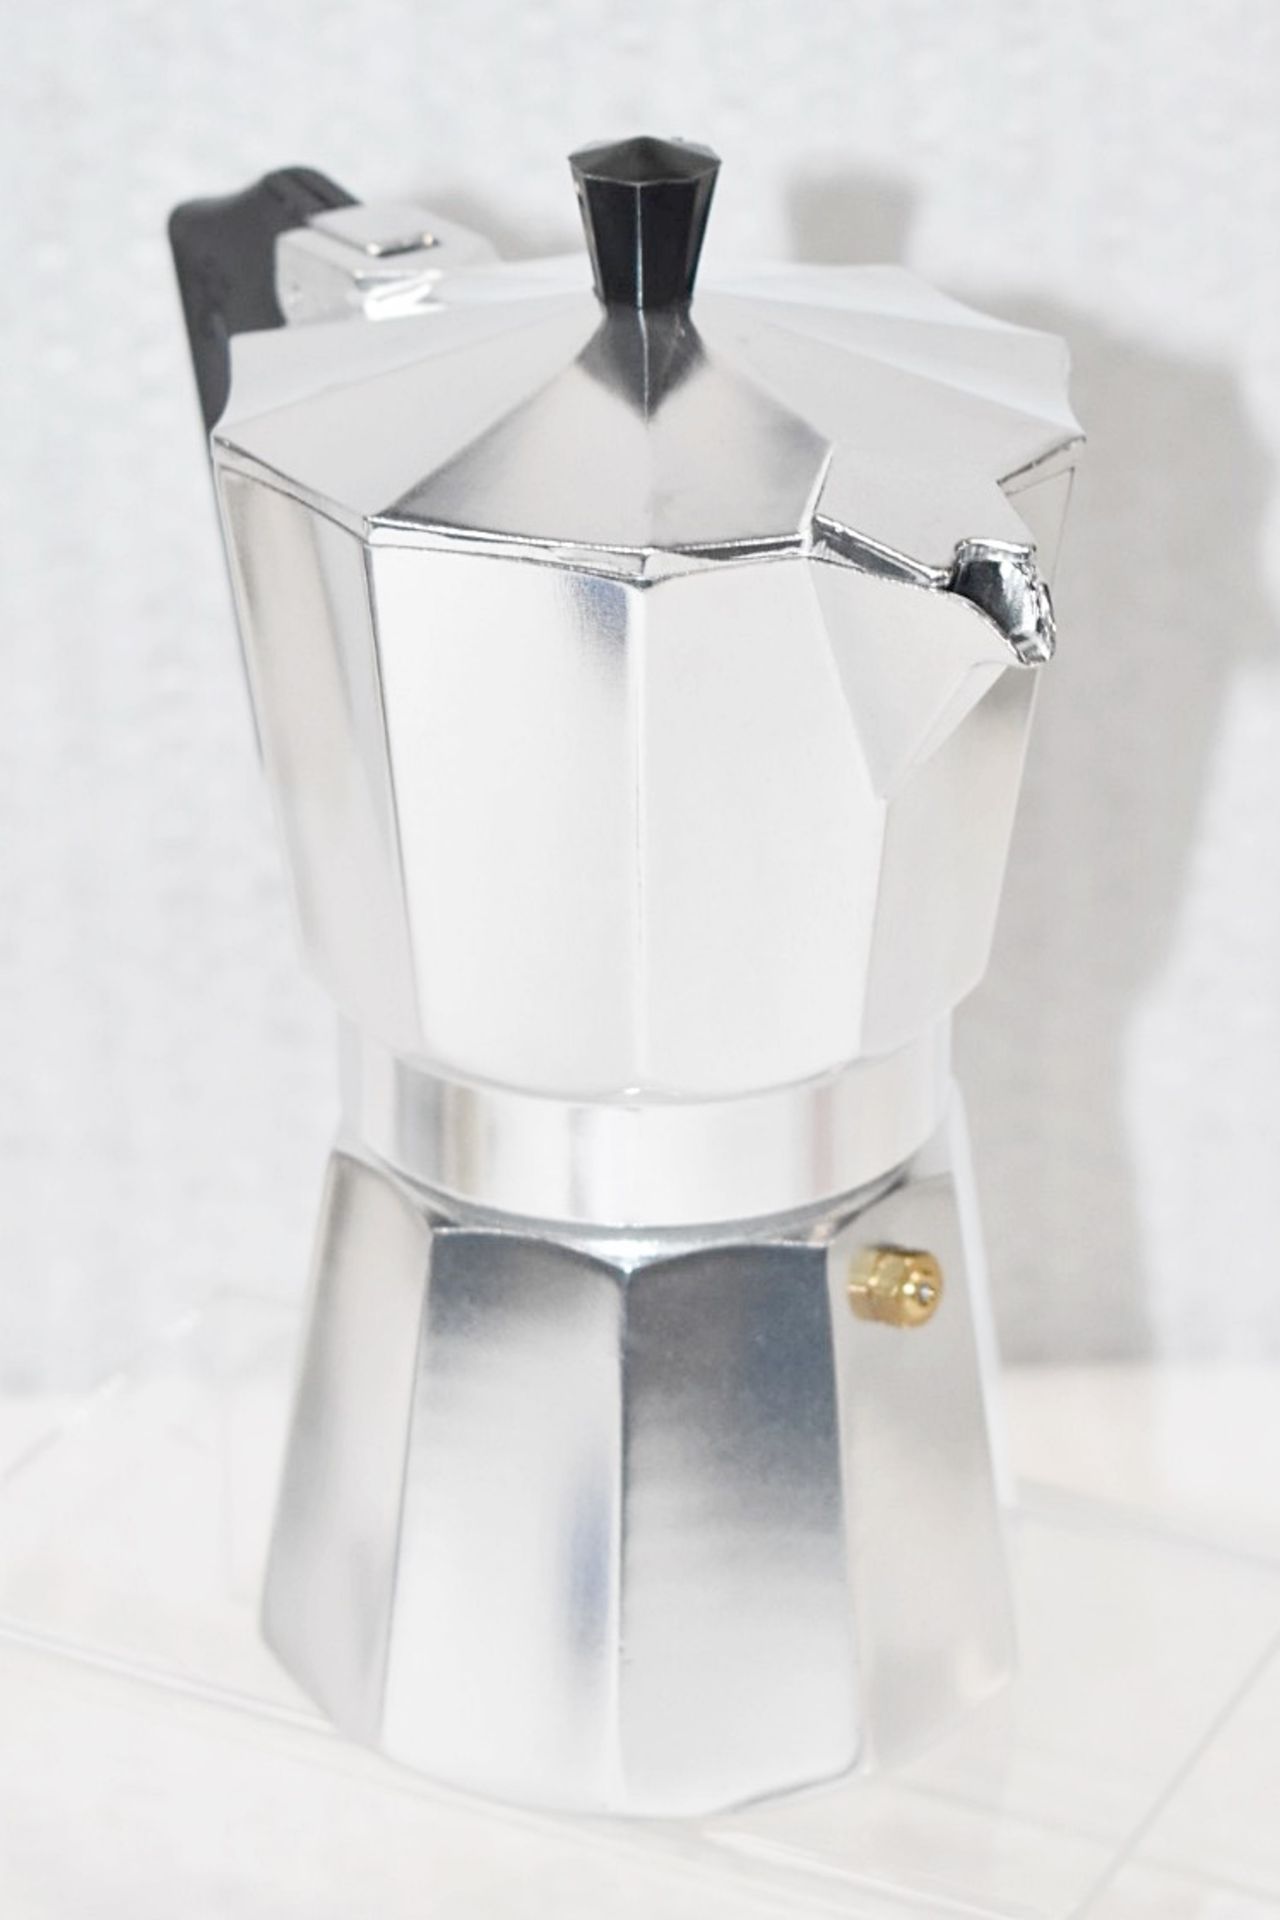 1 x PEZZETTI Italexpress Aluminium Stove Top 6-Cup Moka Pot - Unused Boxed Stock - Ref: HBK366 - Image 5 of 8